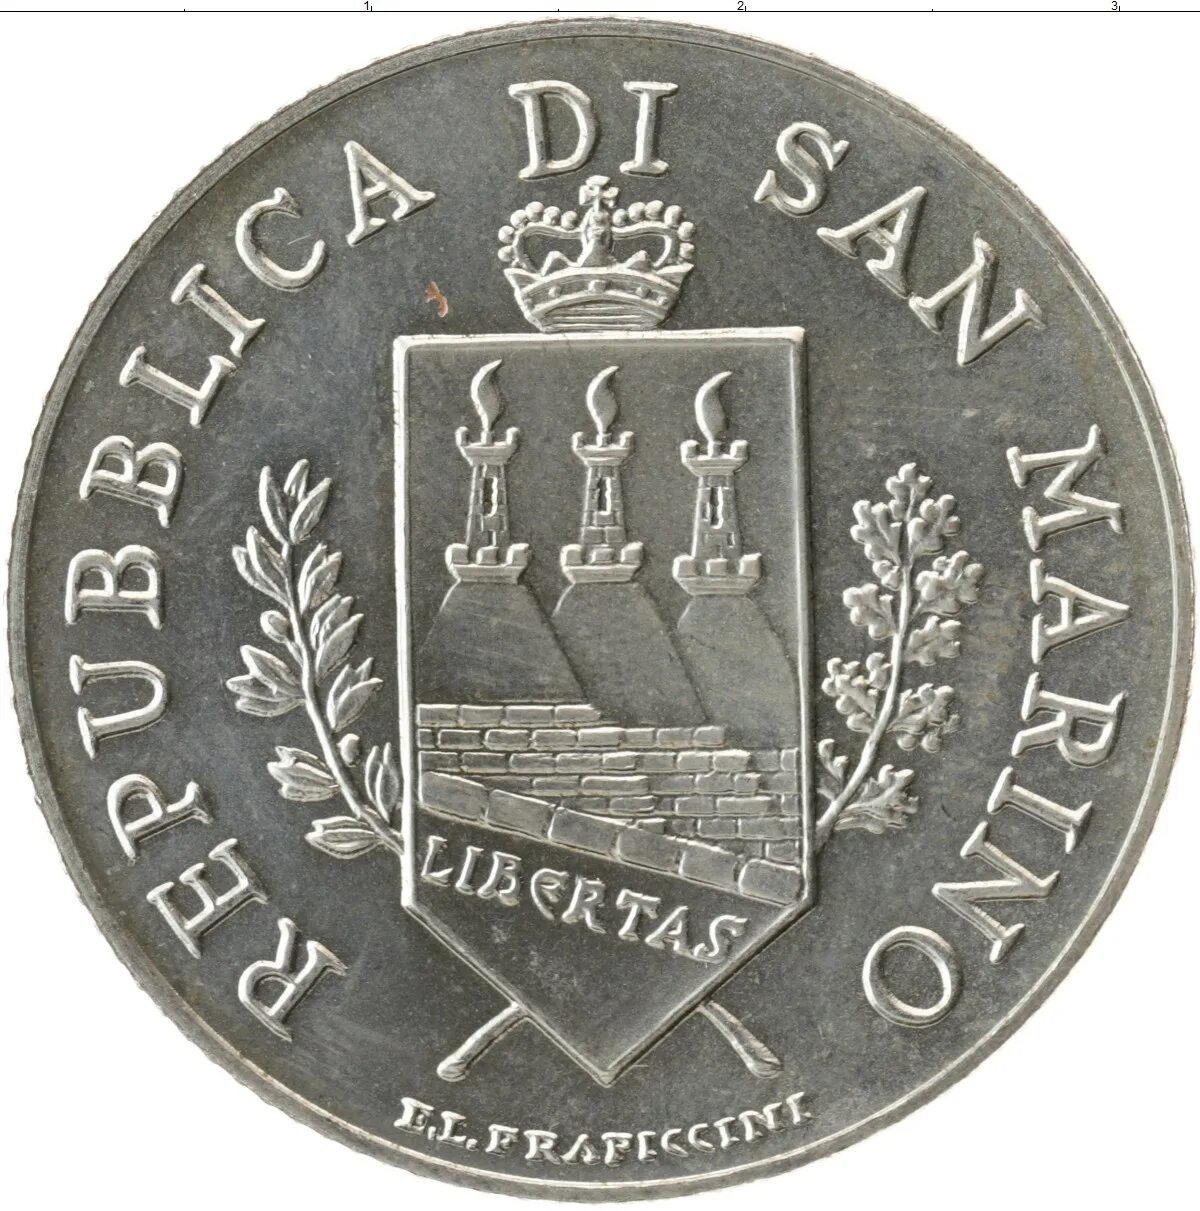 Монеты Сан Марино. Сан Марино золото монеты. Монета Сан Марино 5 евро 2004 года. Сан Марино Стоунхендж монета серебряная 5 евро. Евро сан марино